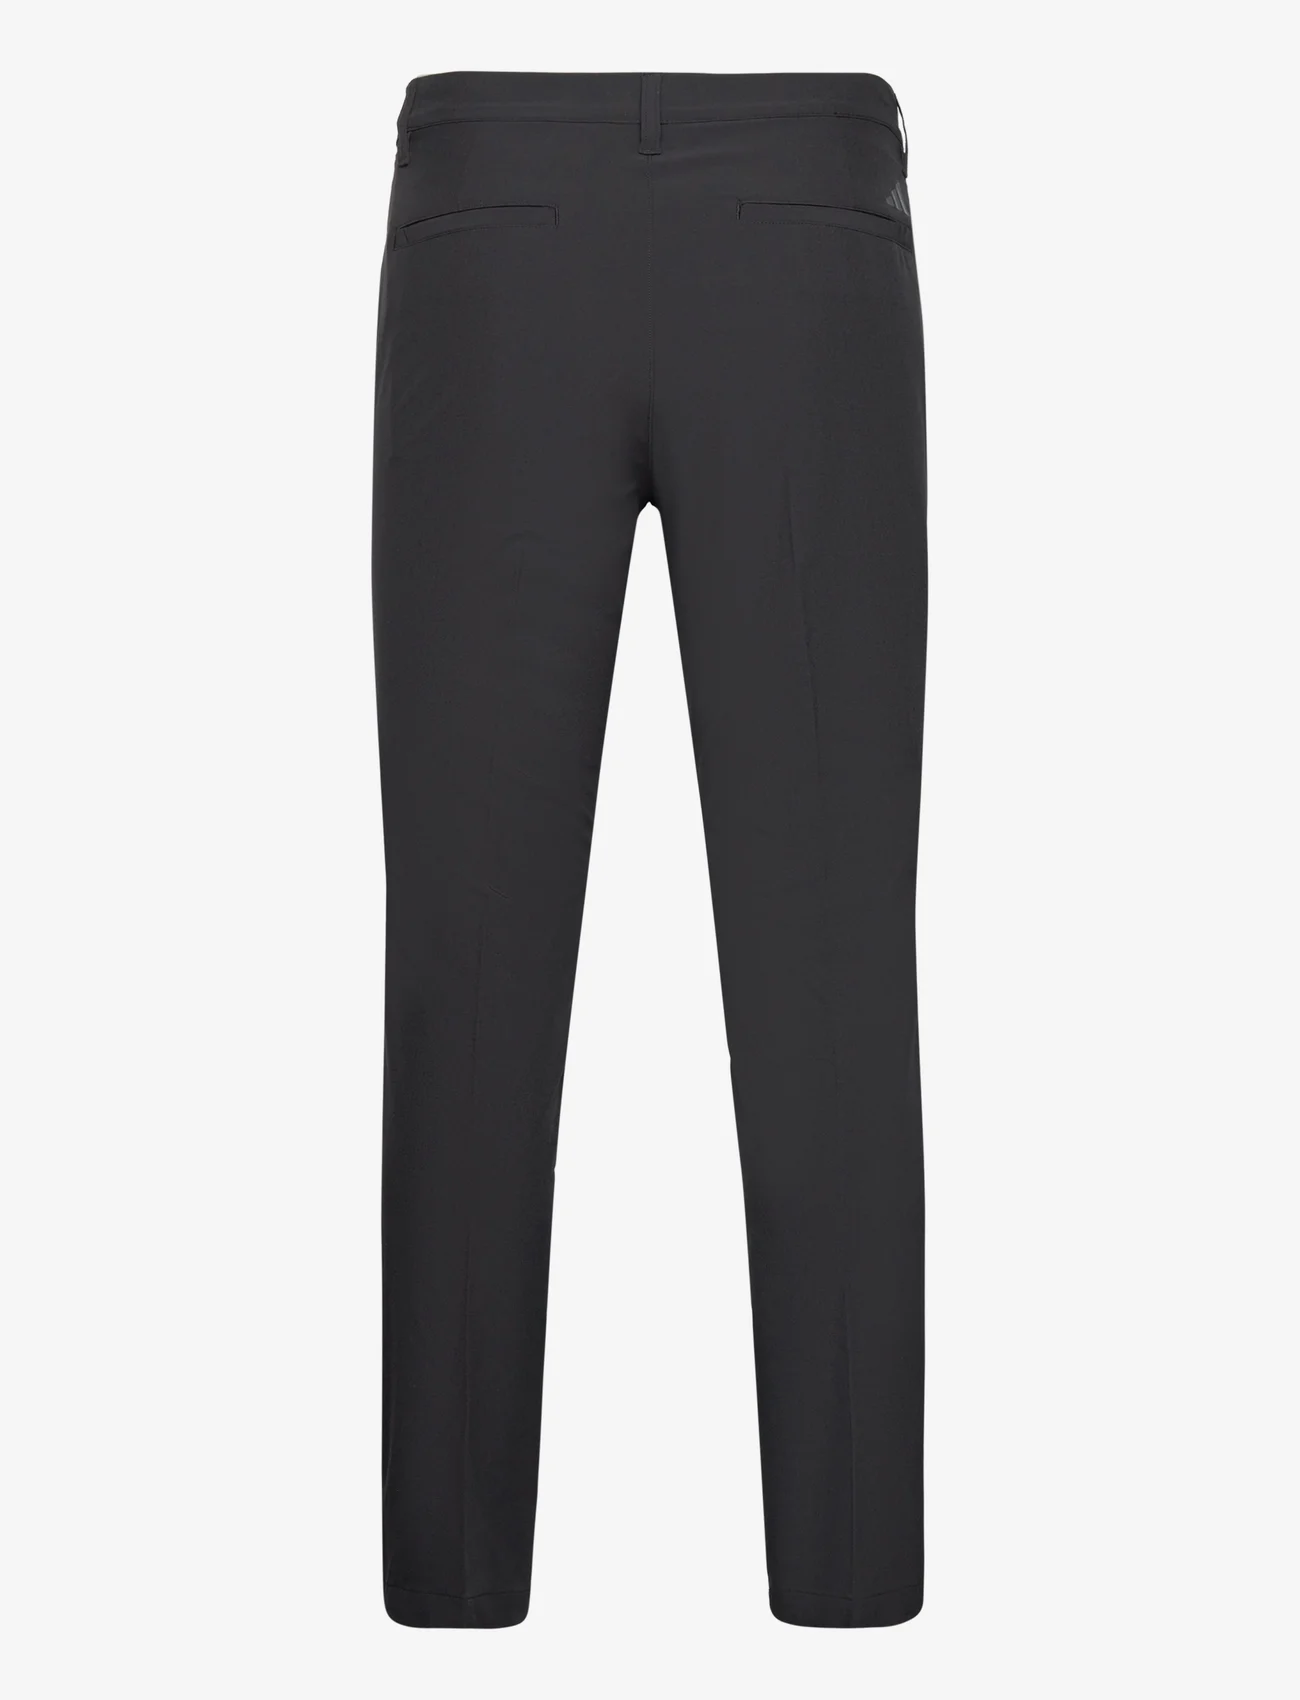 adidas Golf - ULT365 TPR PANT - spodnie sportowe - black - 1